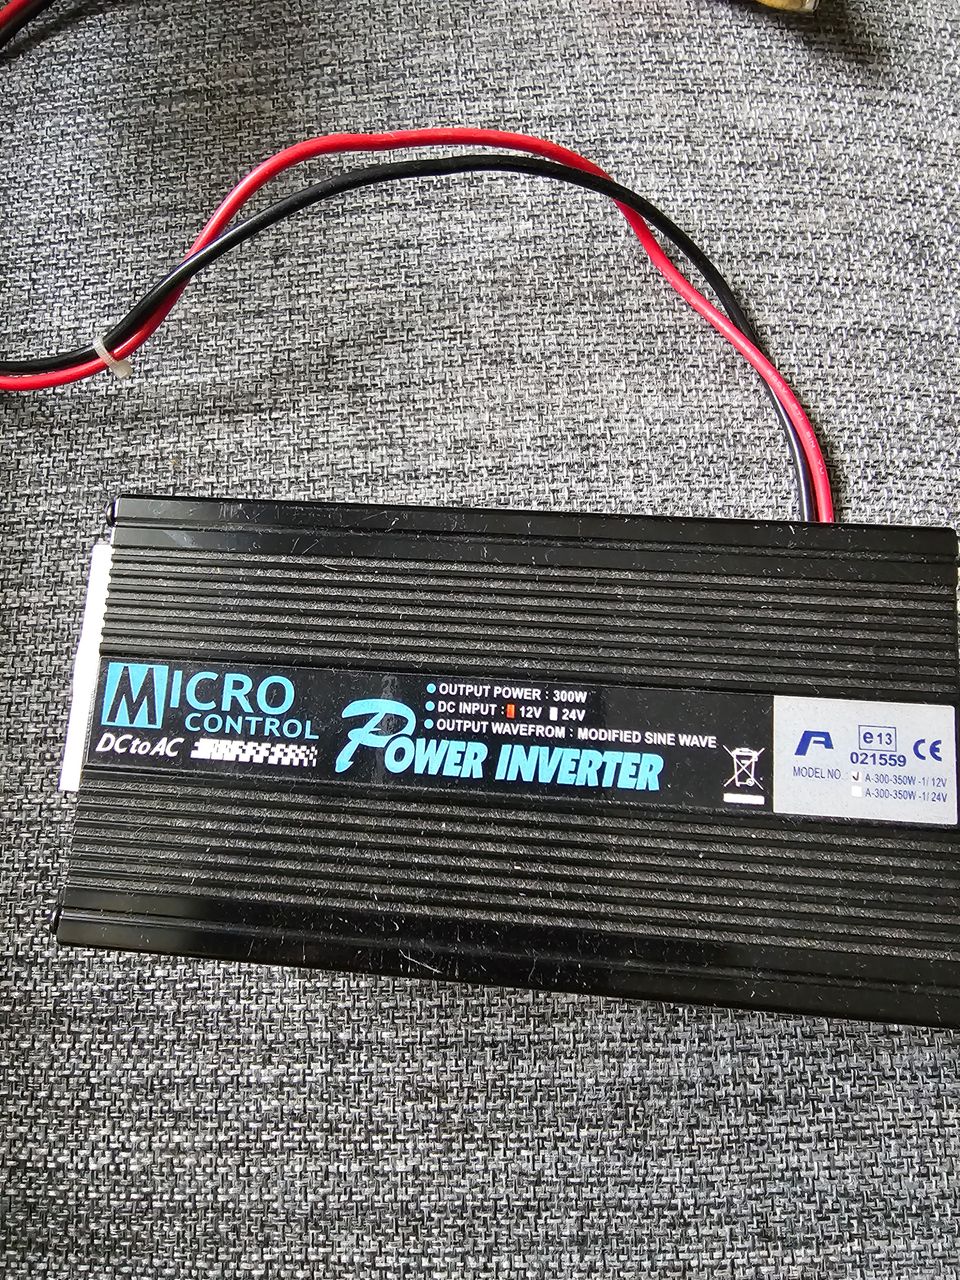 Micro control power invertteri